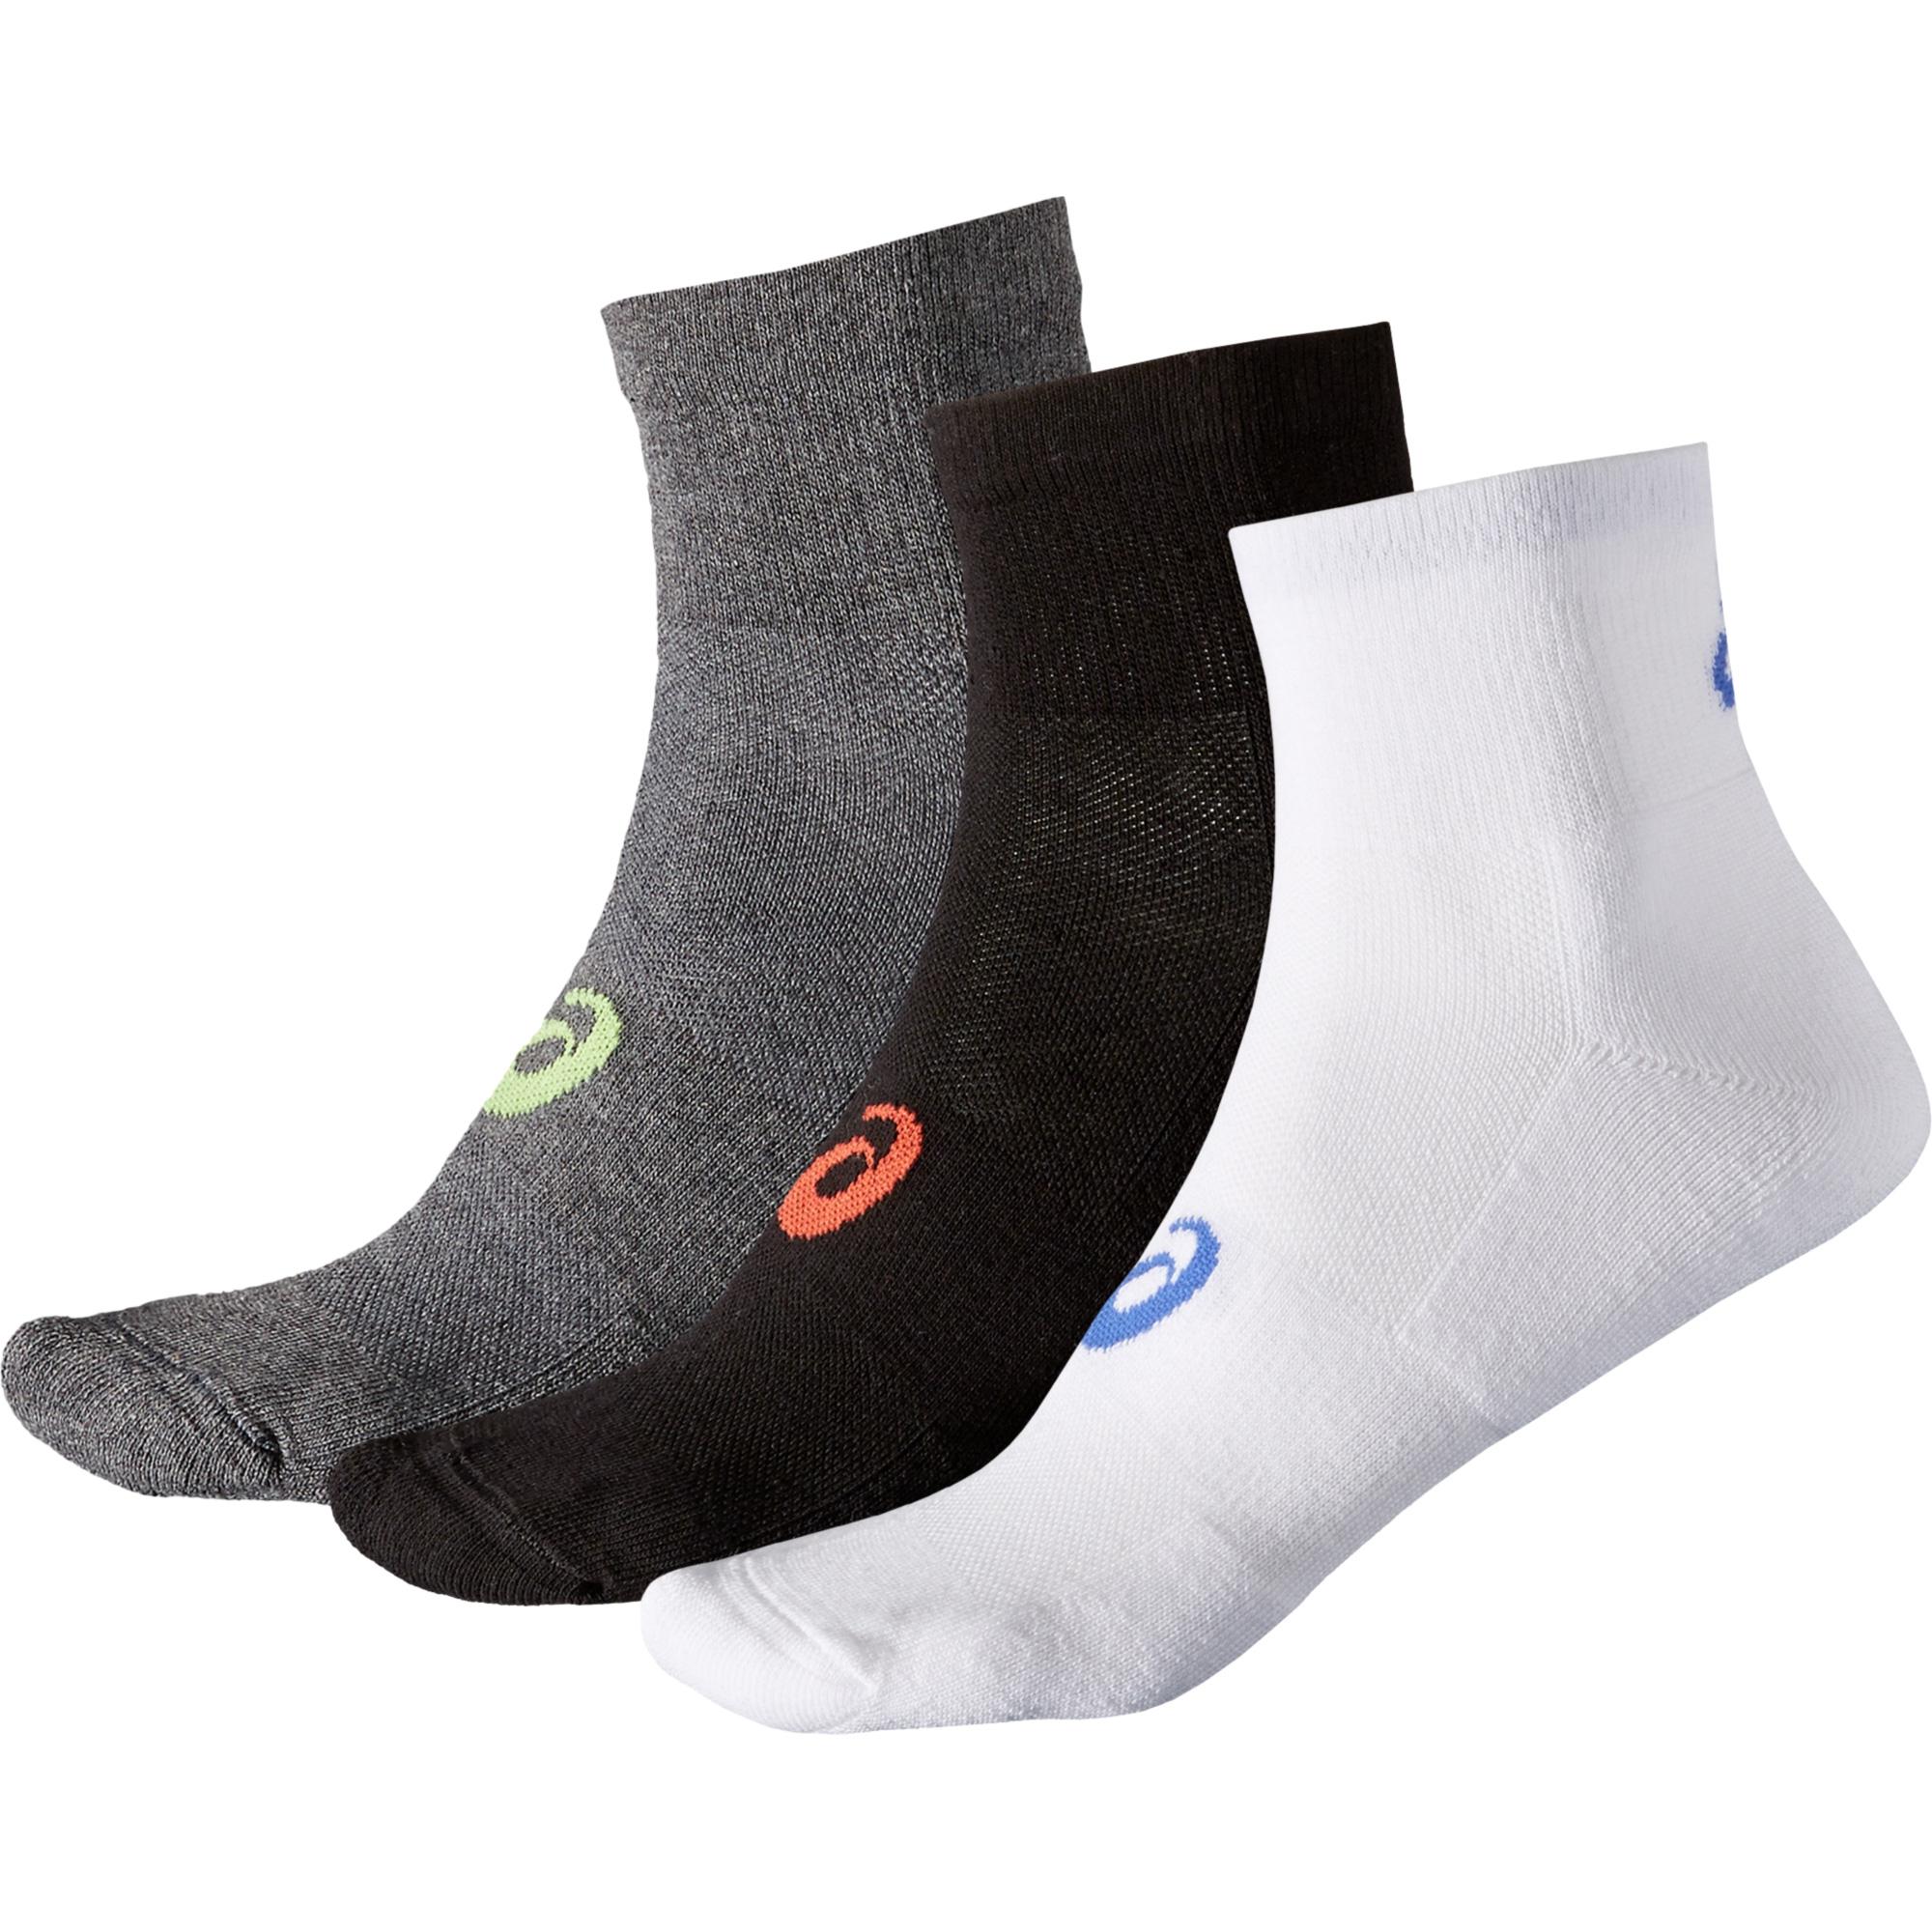 Asics Quarter Socks (3 Pairs) - Grey/Black/White - Tennisnuts.com